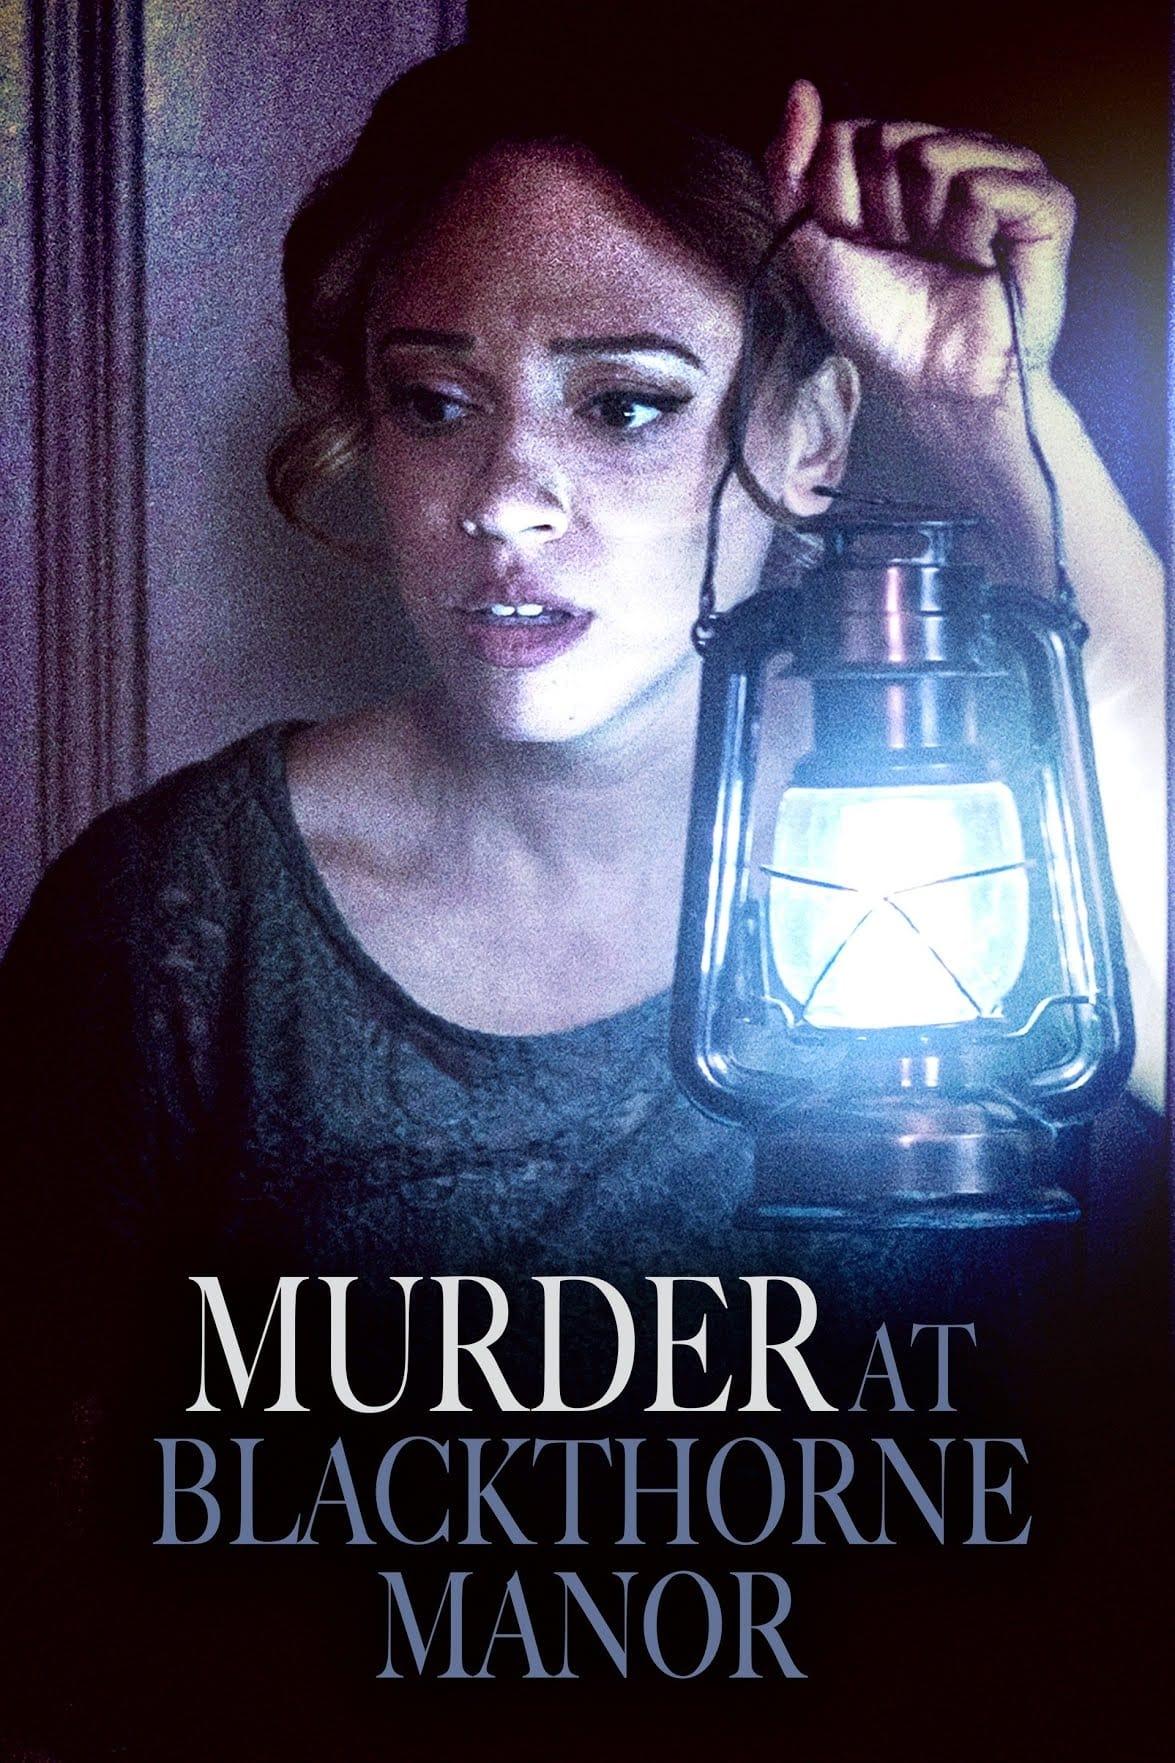 Murder at Blackthorne Manor poster